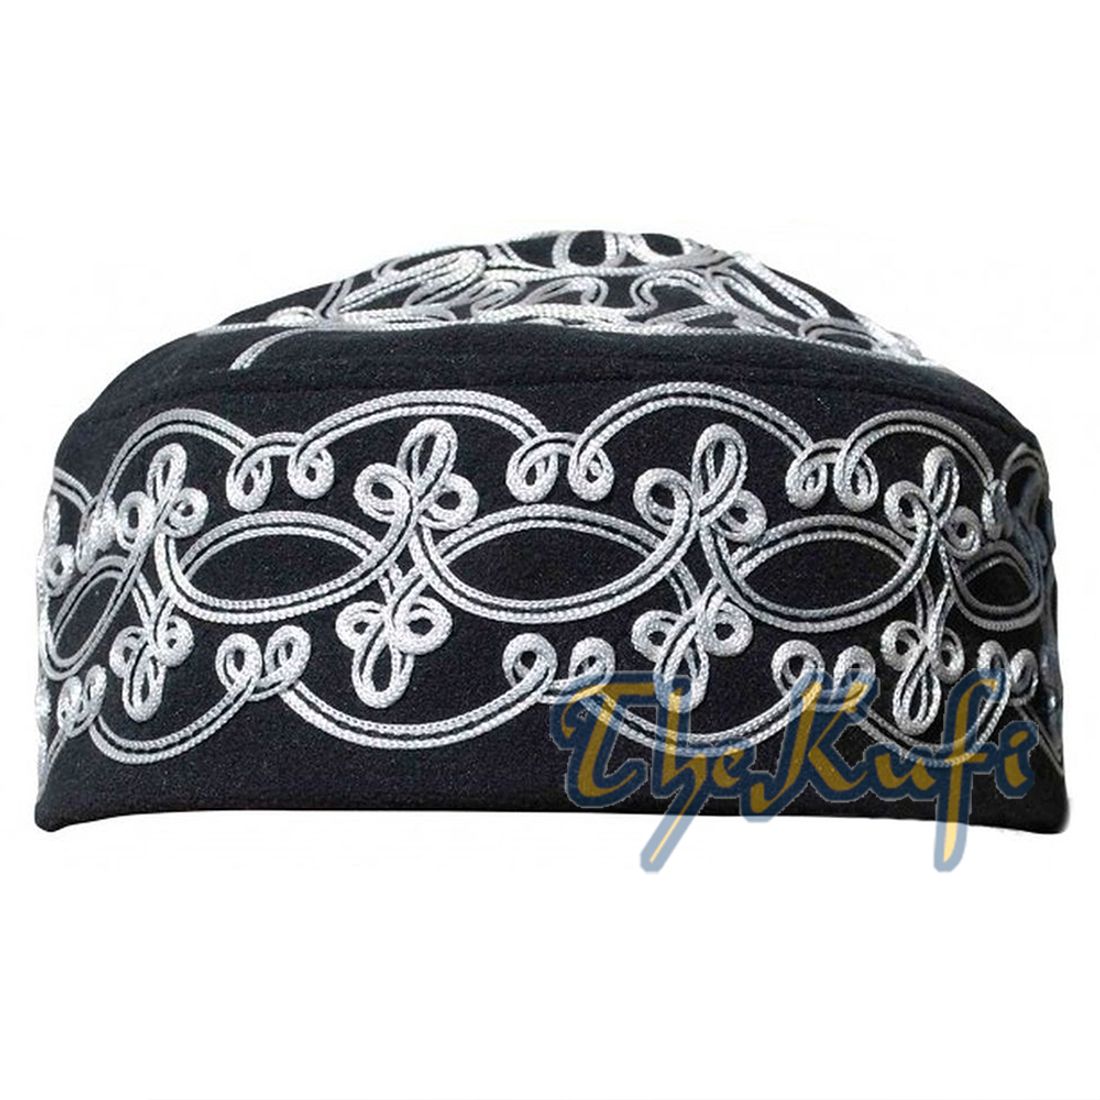 Handcrafted Black & White Macramé Open Design Felt Kufi Hat Prayer Cap